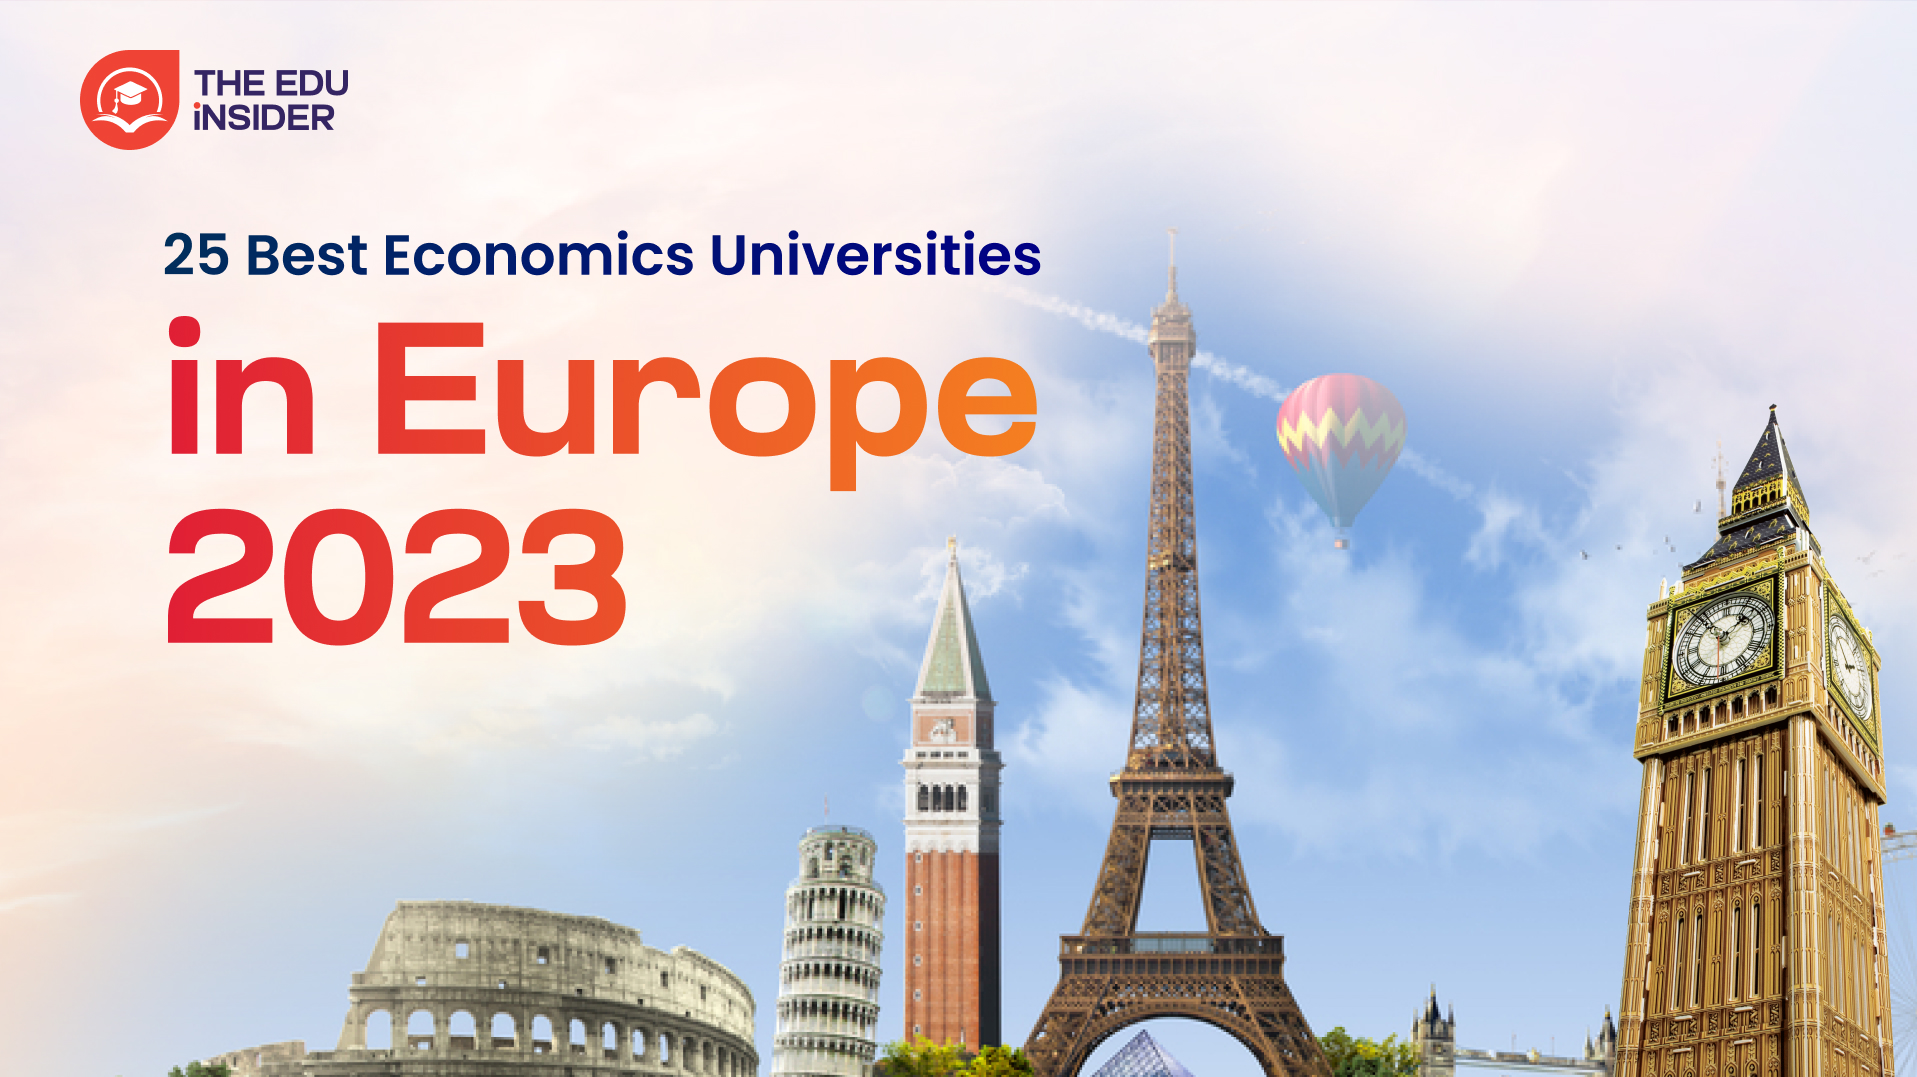 phd in economics in europe